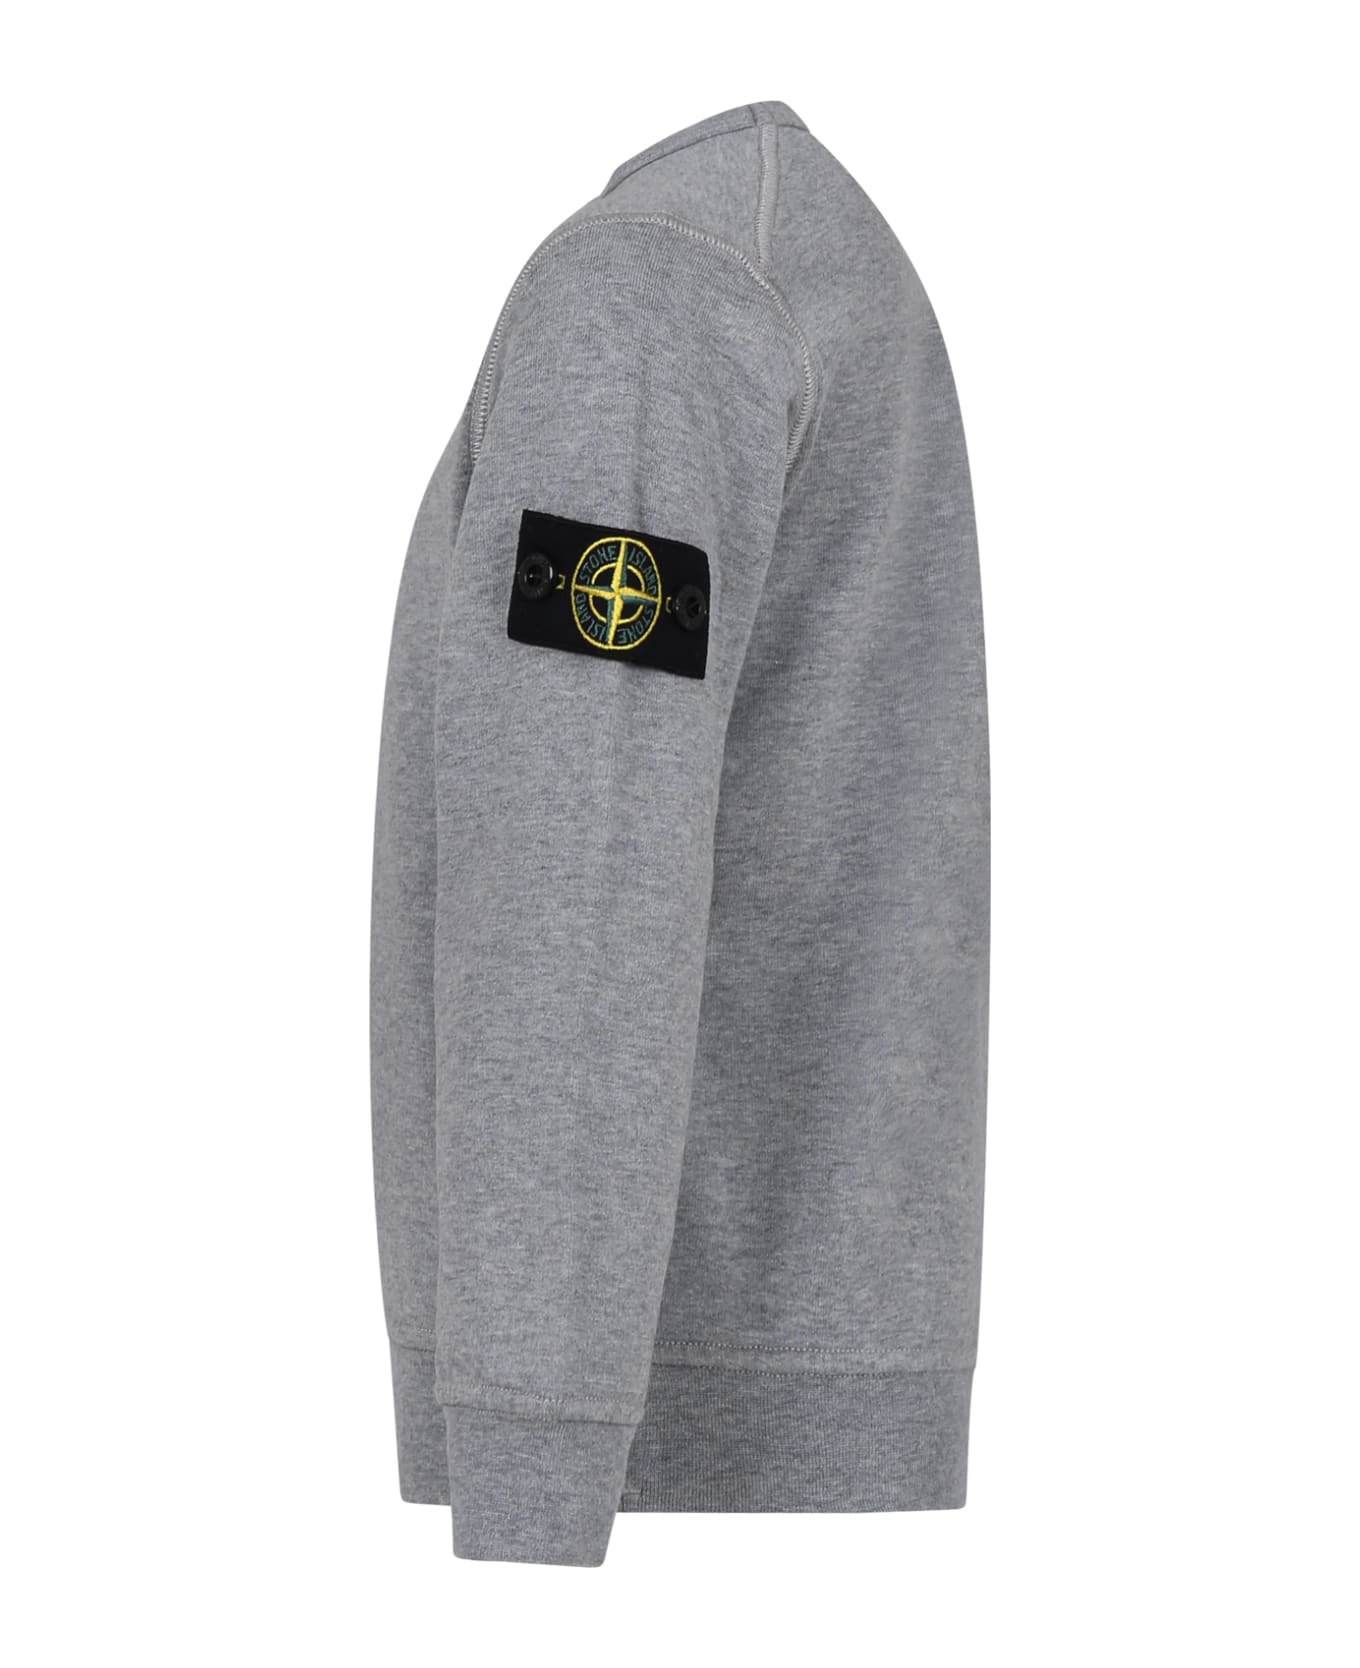 Stone Island Junior Grey Sweatshirt For Boy With Iconic Logo - Grey melange